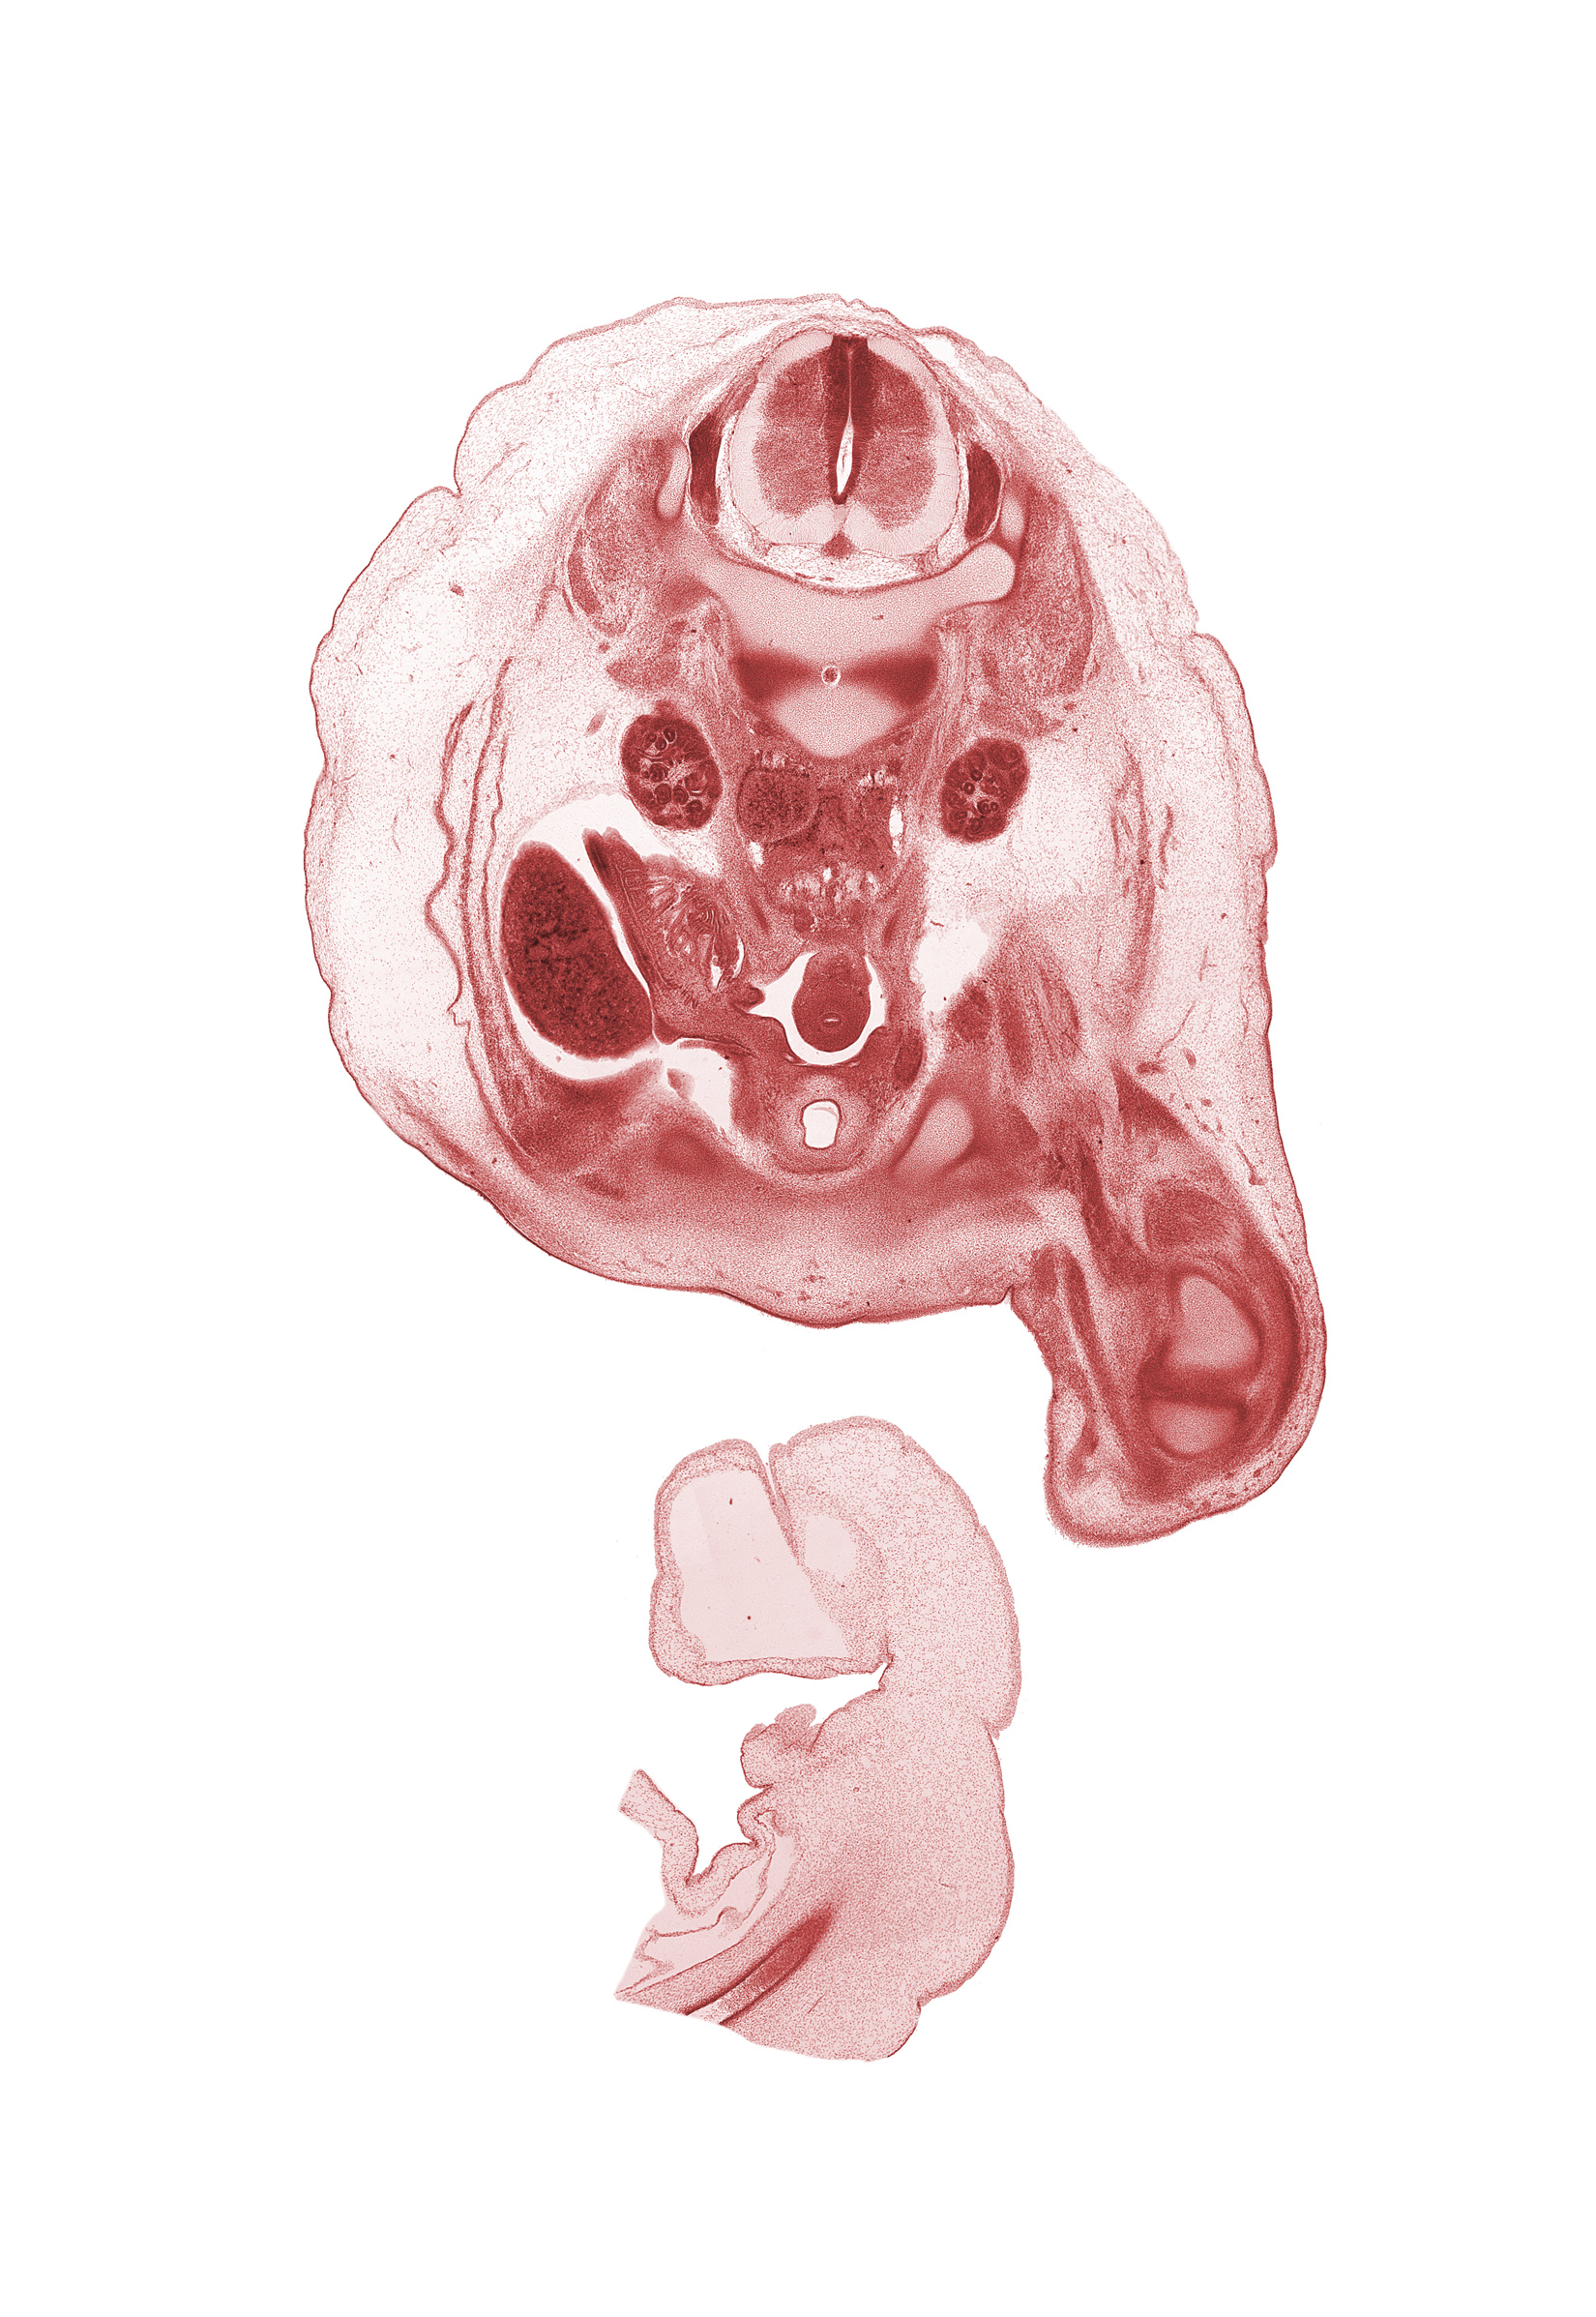 L-2 / L-3 intervertebral disc, L-2 spinal ganglion, L-2 ventral root, amnion on surface of umbilical cord, aorta, caudal edge of liver, epididymis, external abdominal oblique muscle, gubernaculum of testis, inferior pole of kidney (metanephros), inferior vena cava (subcardinal vein), internal abdominal oblique muscle, medial condyle of tibia, medial epicondyle of femur, pubis, testis, transversus abdominis muscle, umbilical coelom, ureter, urinary bladder, vas deferens (mesonephric duct)